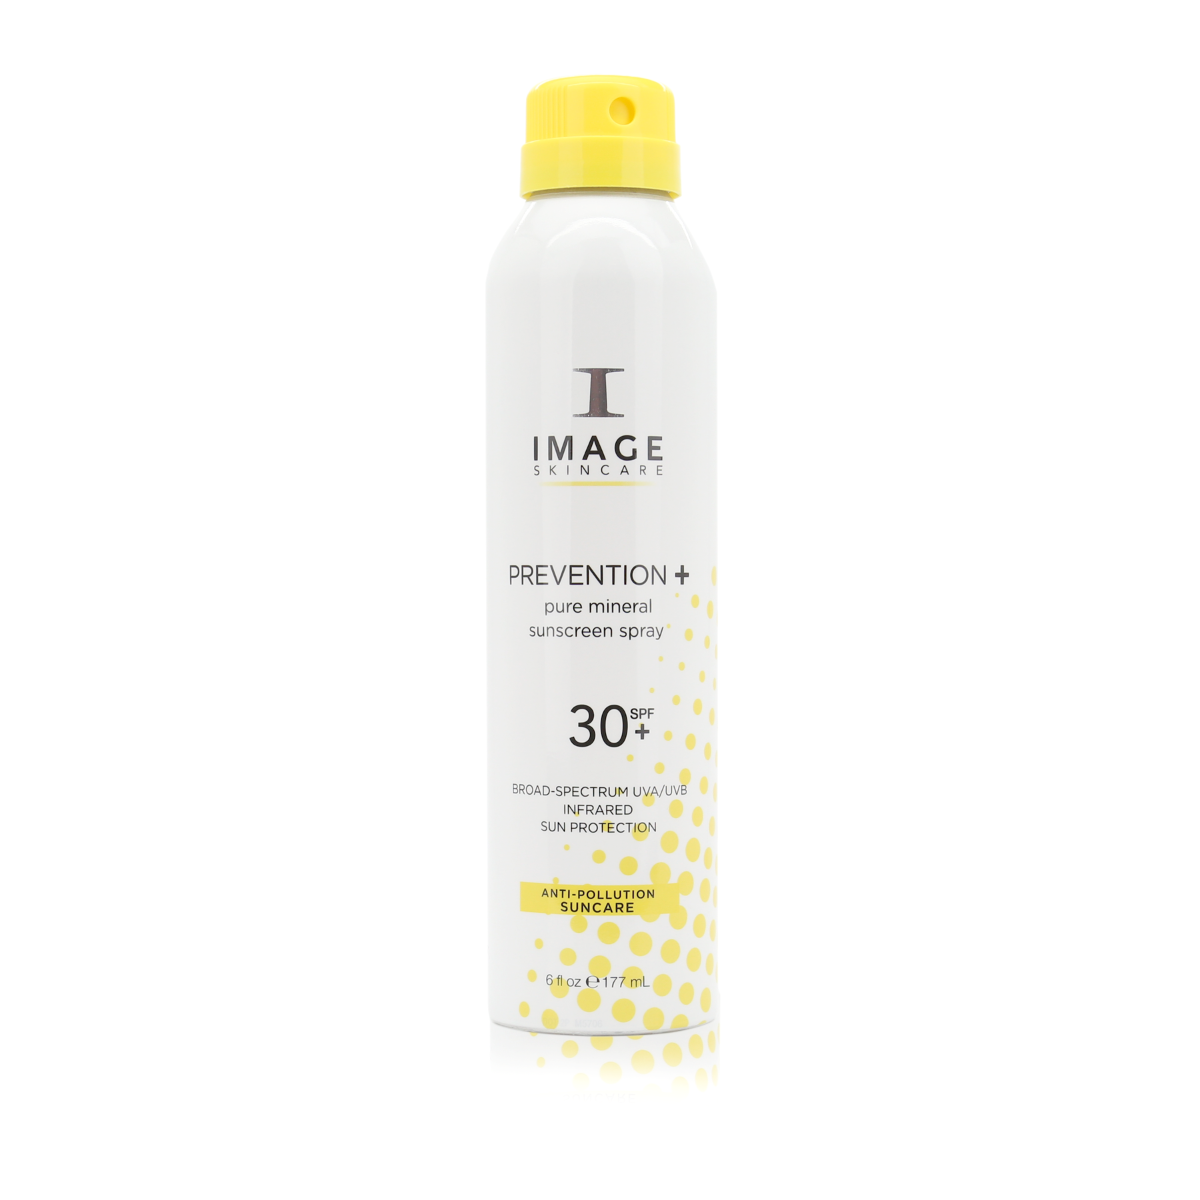 Image Skincare Prevention + Pure Mineral Sunscreen Spray SPF 30+